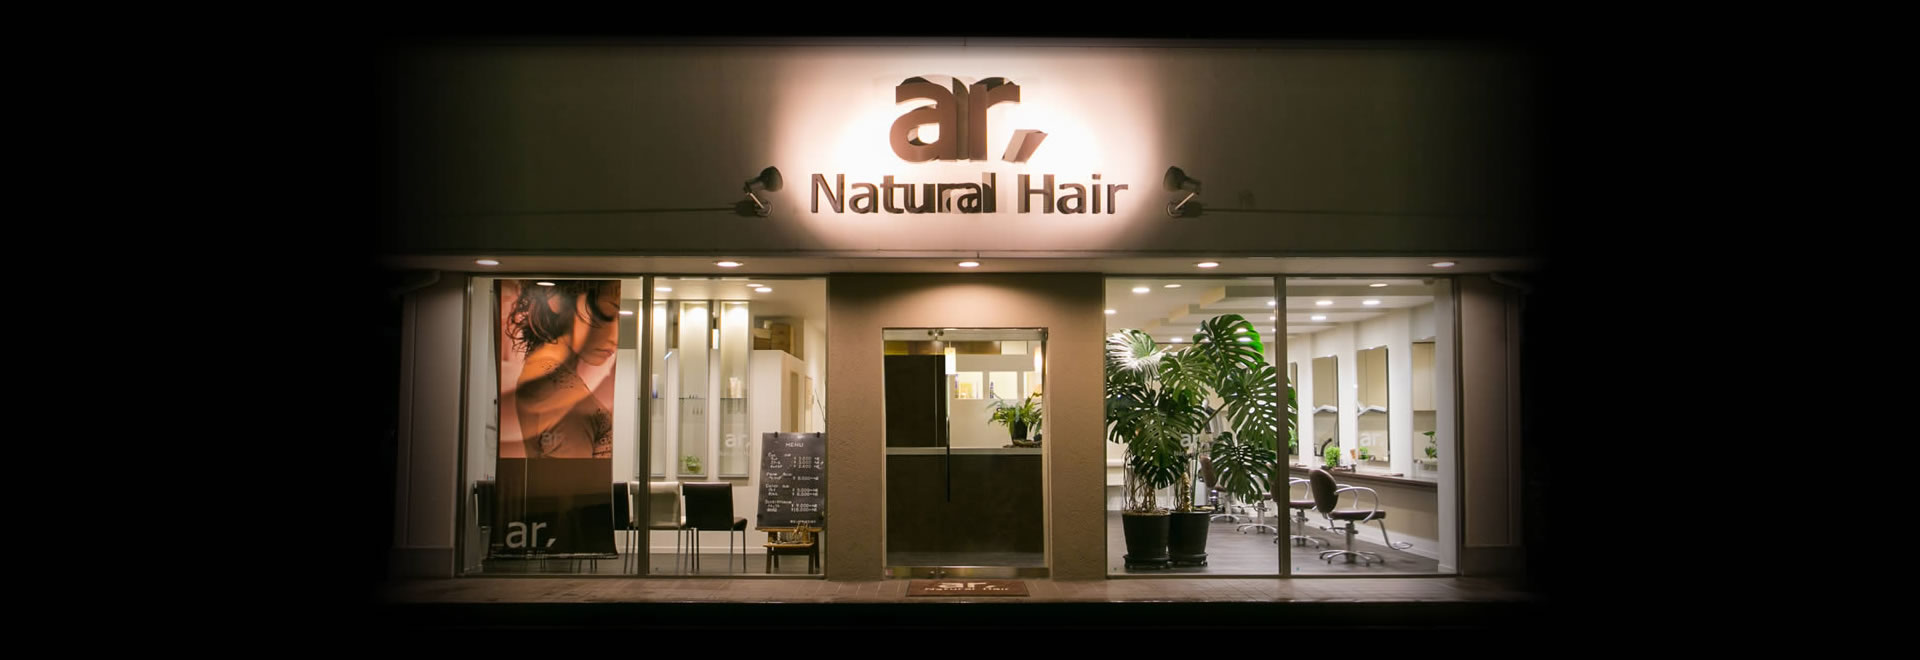 Natural Hair ar